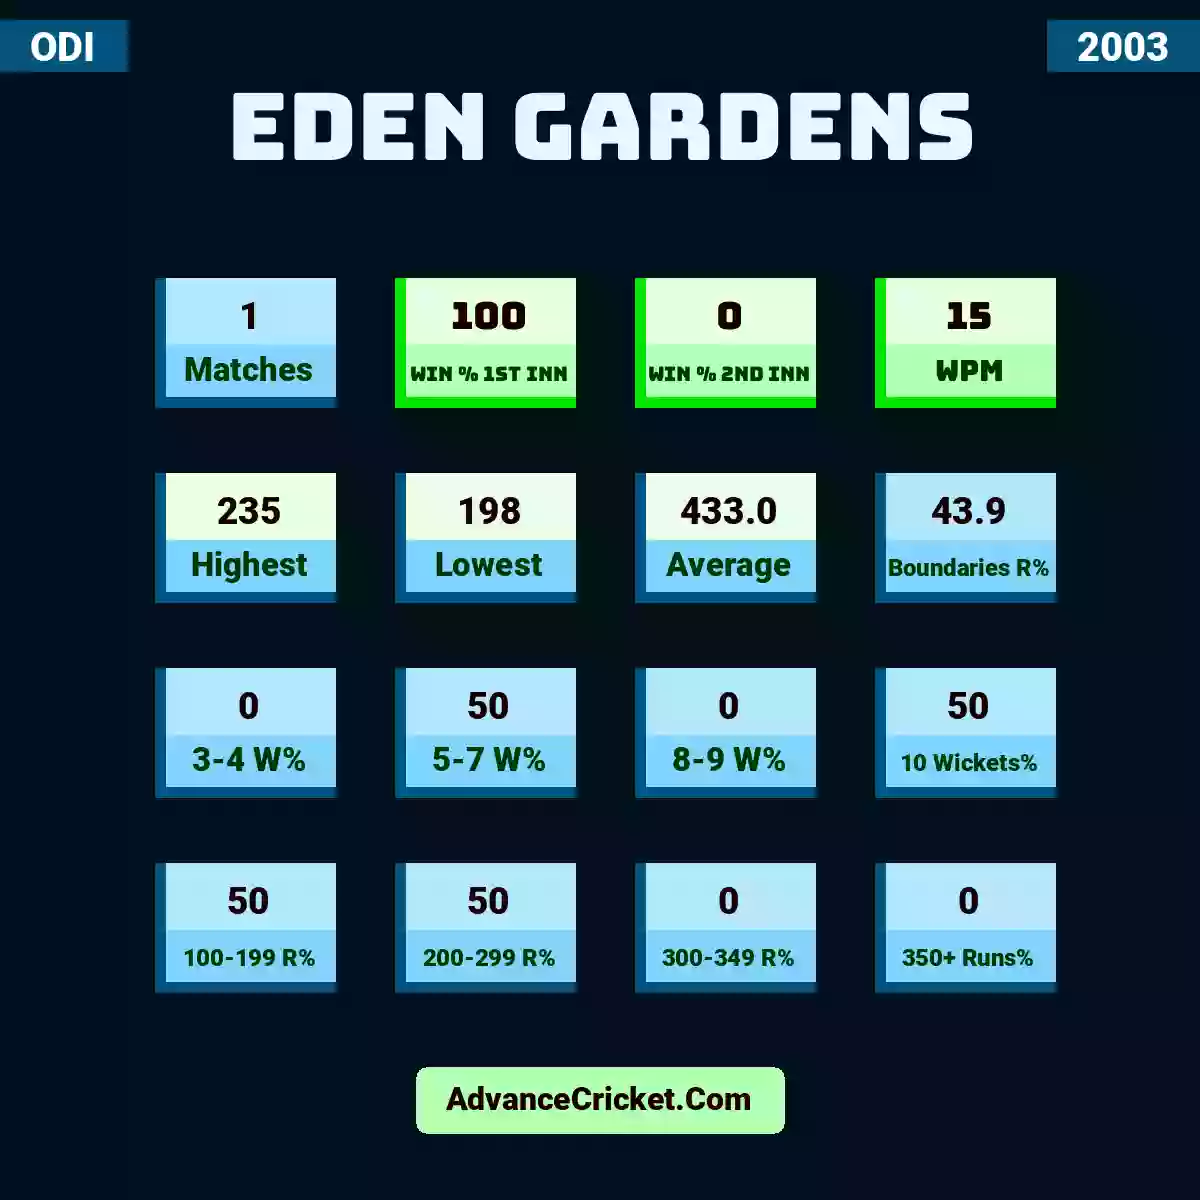 Image showing Eden Gardens with Matches: 1, Win % 1st Inn: 100, Win % 2nd Inn: 0, WPM: 15, Highest: 235, Lowest: 198, Average: 433.0, Boundaries R%: 43.9, 3-4 W%: 0, 5-7 W%: 50, 8-9 W%: 0, 10 Wickets%: 50, 100-199 R%: 50, 200-299 R%: 50, 300-349 R%: 0, 350+ Runs%: 0.